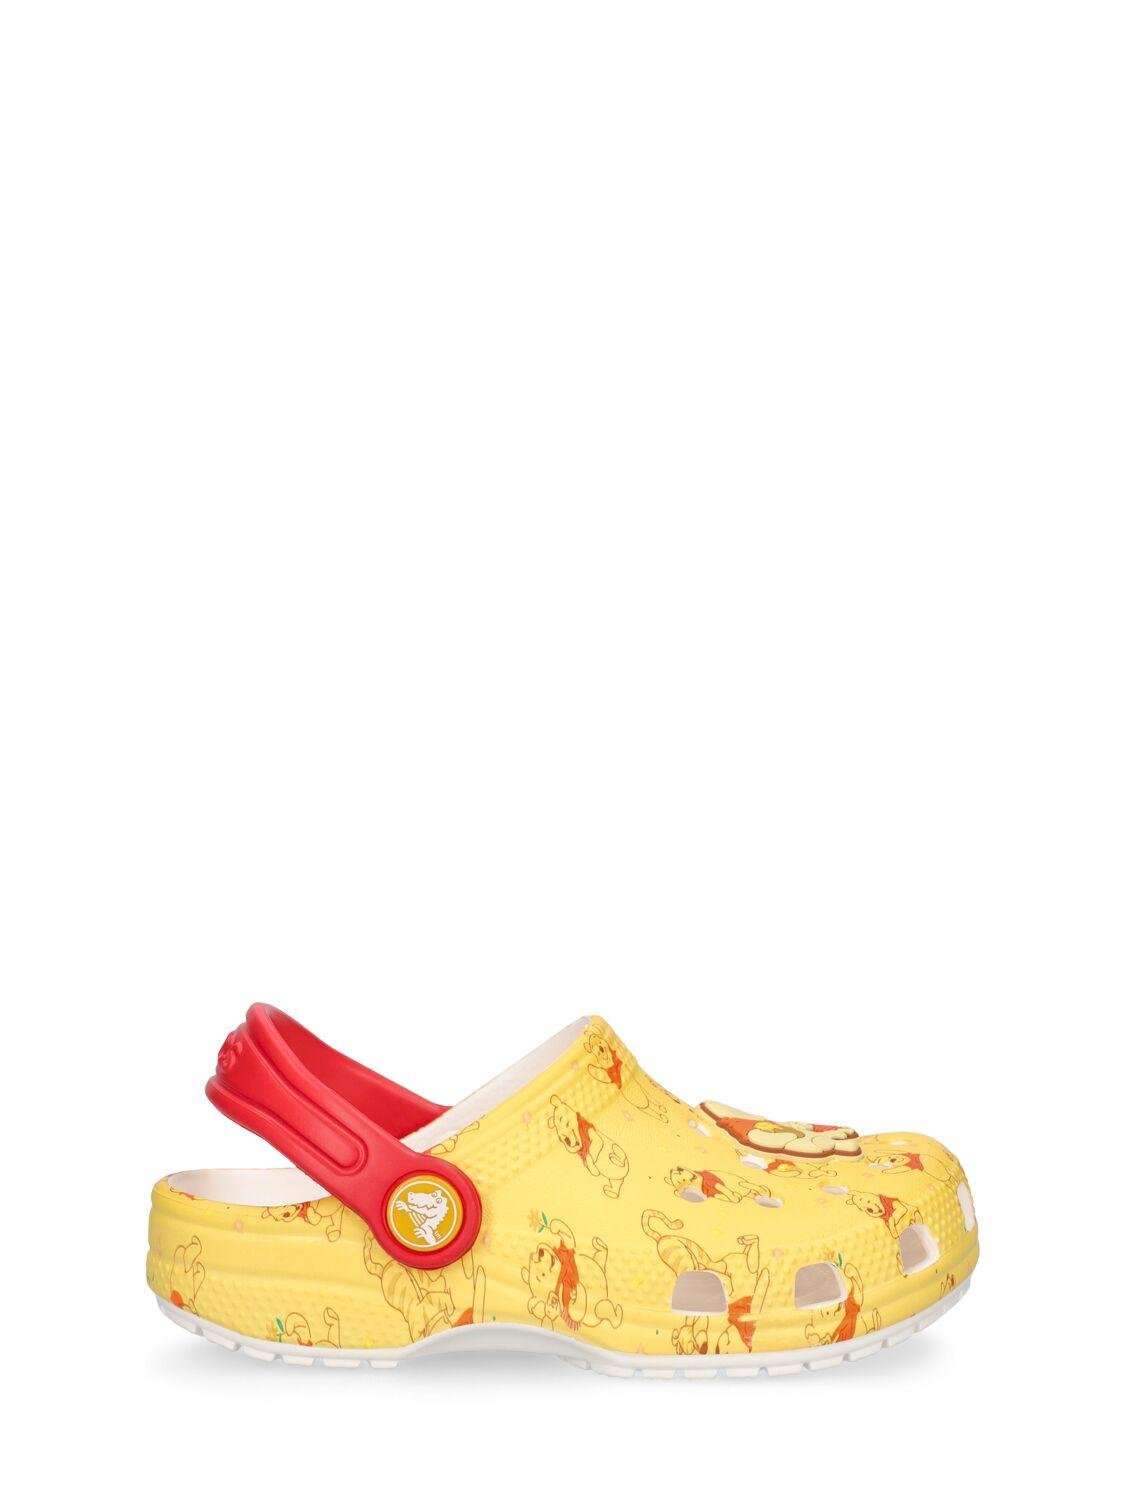 Winnie The Pooh Print Rubber Crocs by CROCS